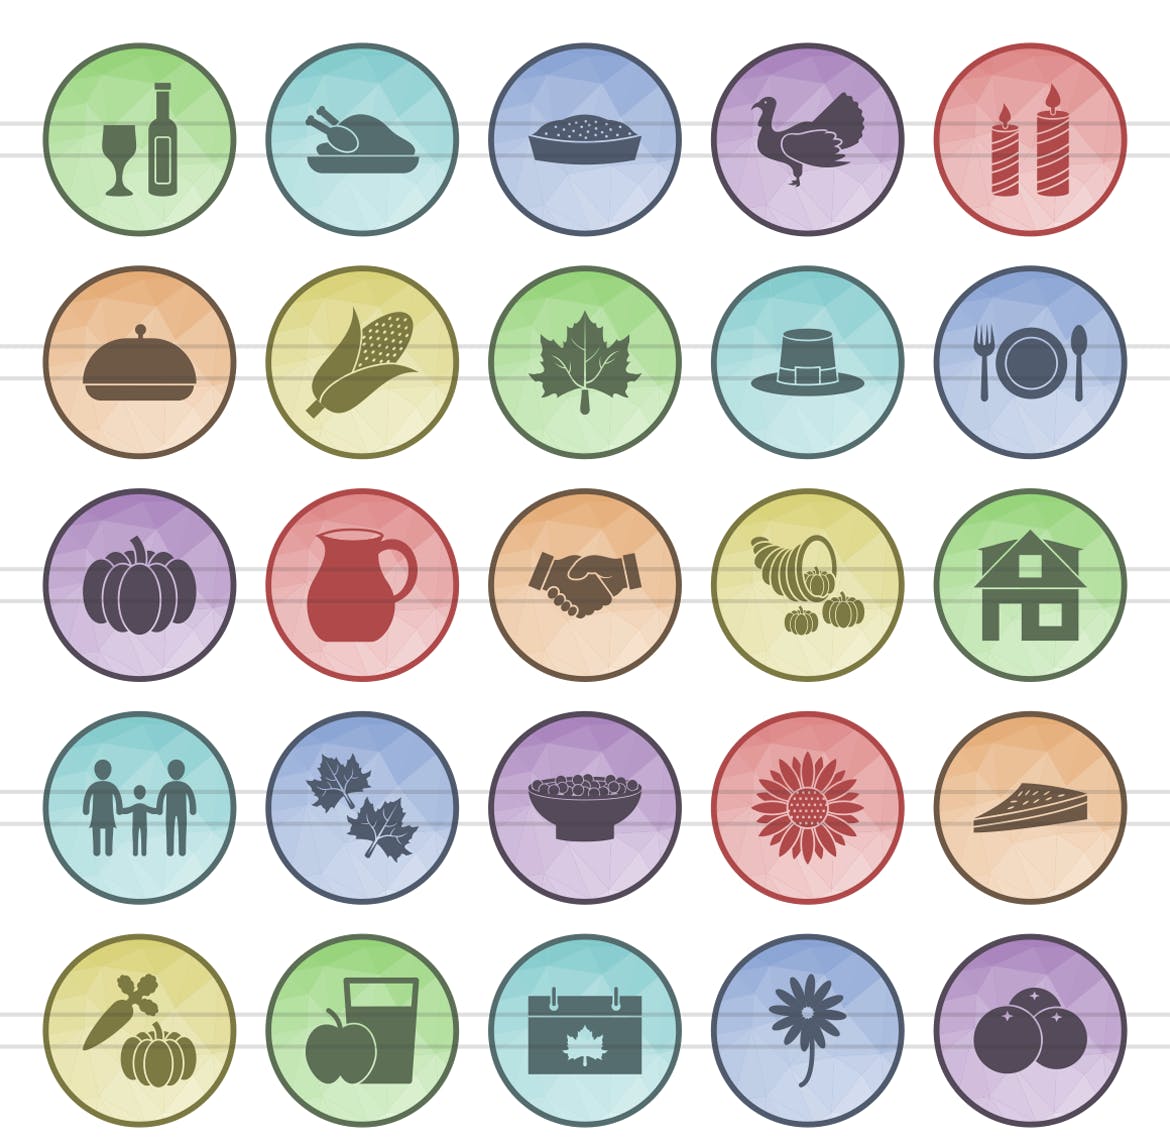 50枚感恩节主题圆形第一素材精选图标素材 50 Thanksgiving Filled Low Poly Icons插图(1)